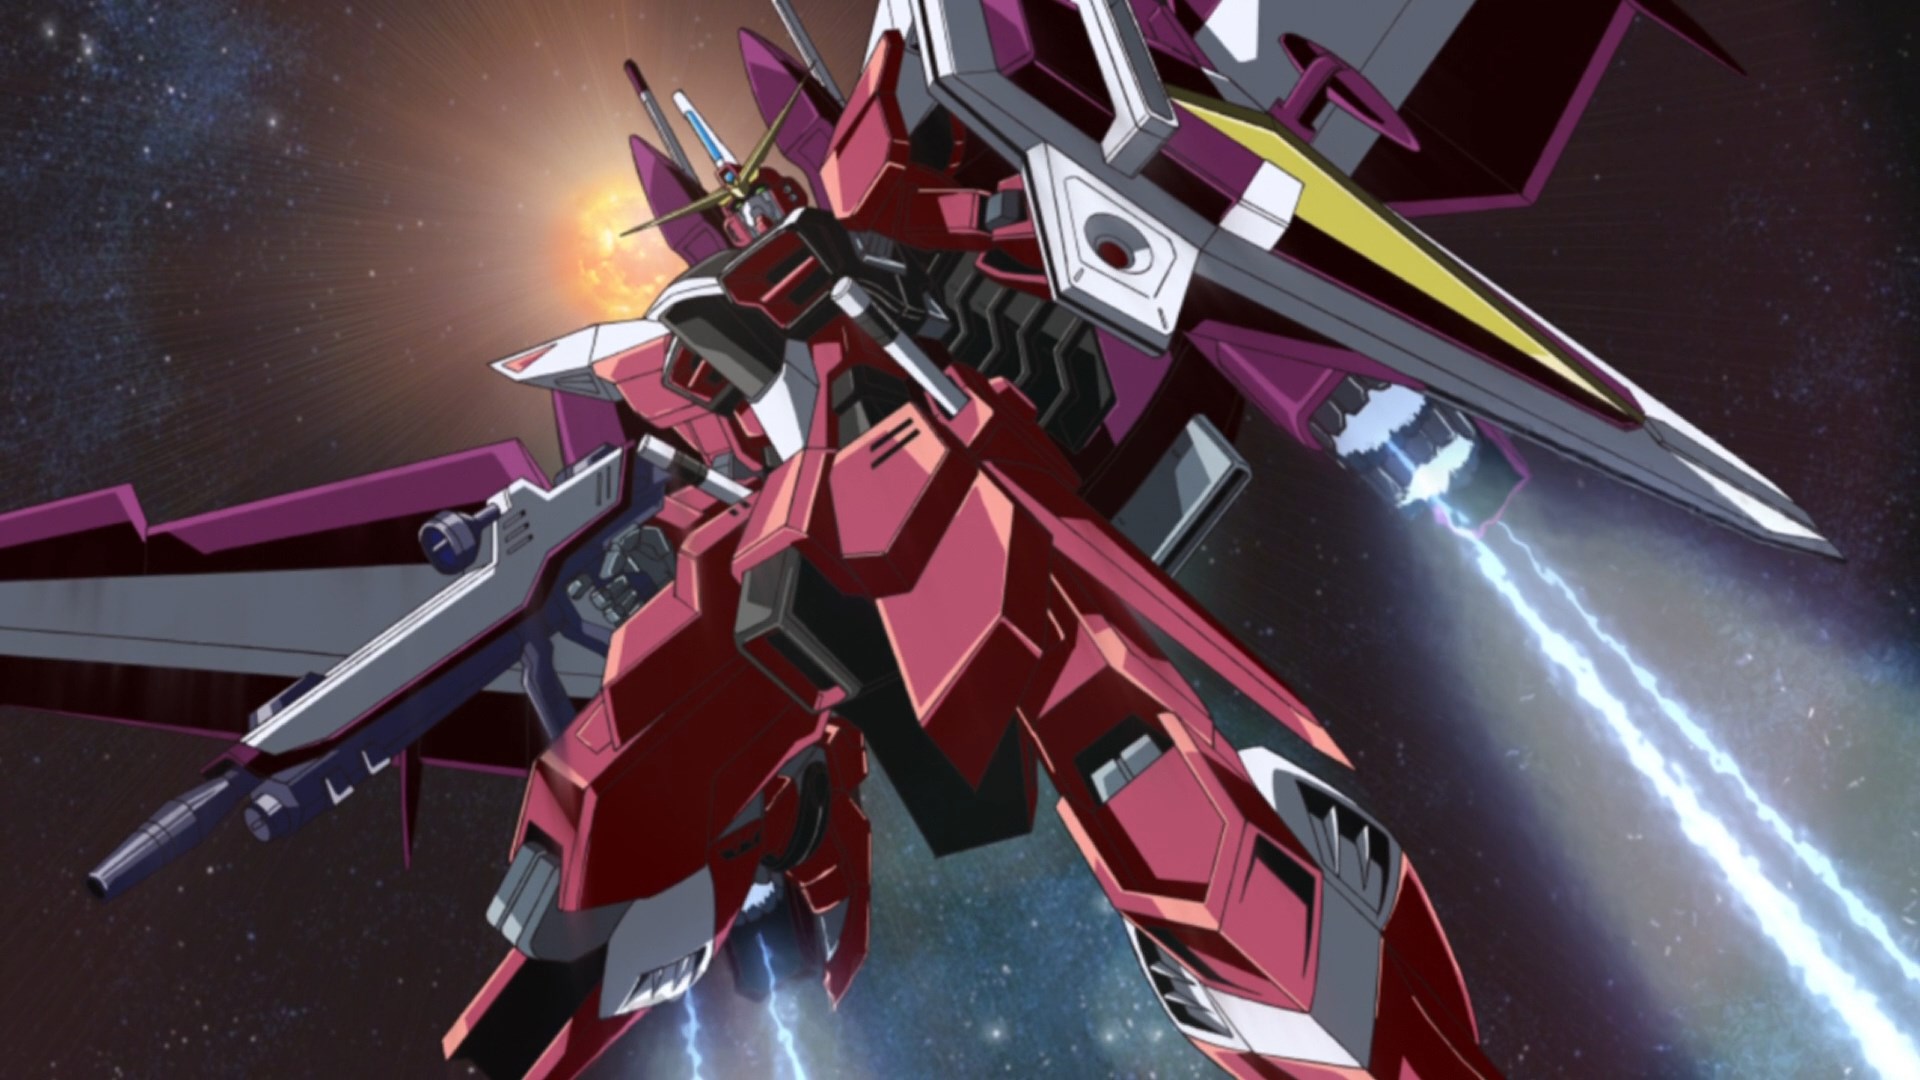 Anime 1920x1080 anime Anime screenshot Mobile Suit Gundam SEED Gundam mechs Justice Gundam Super Robot Taisen artwork digital art